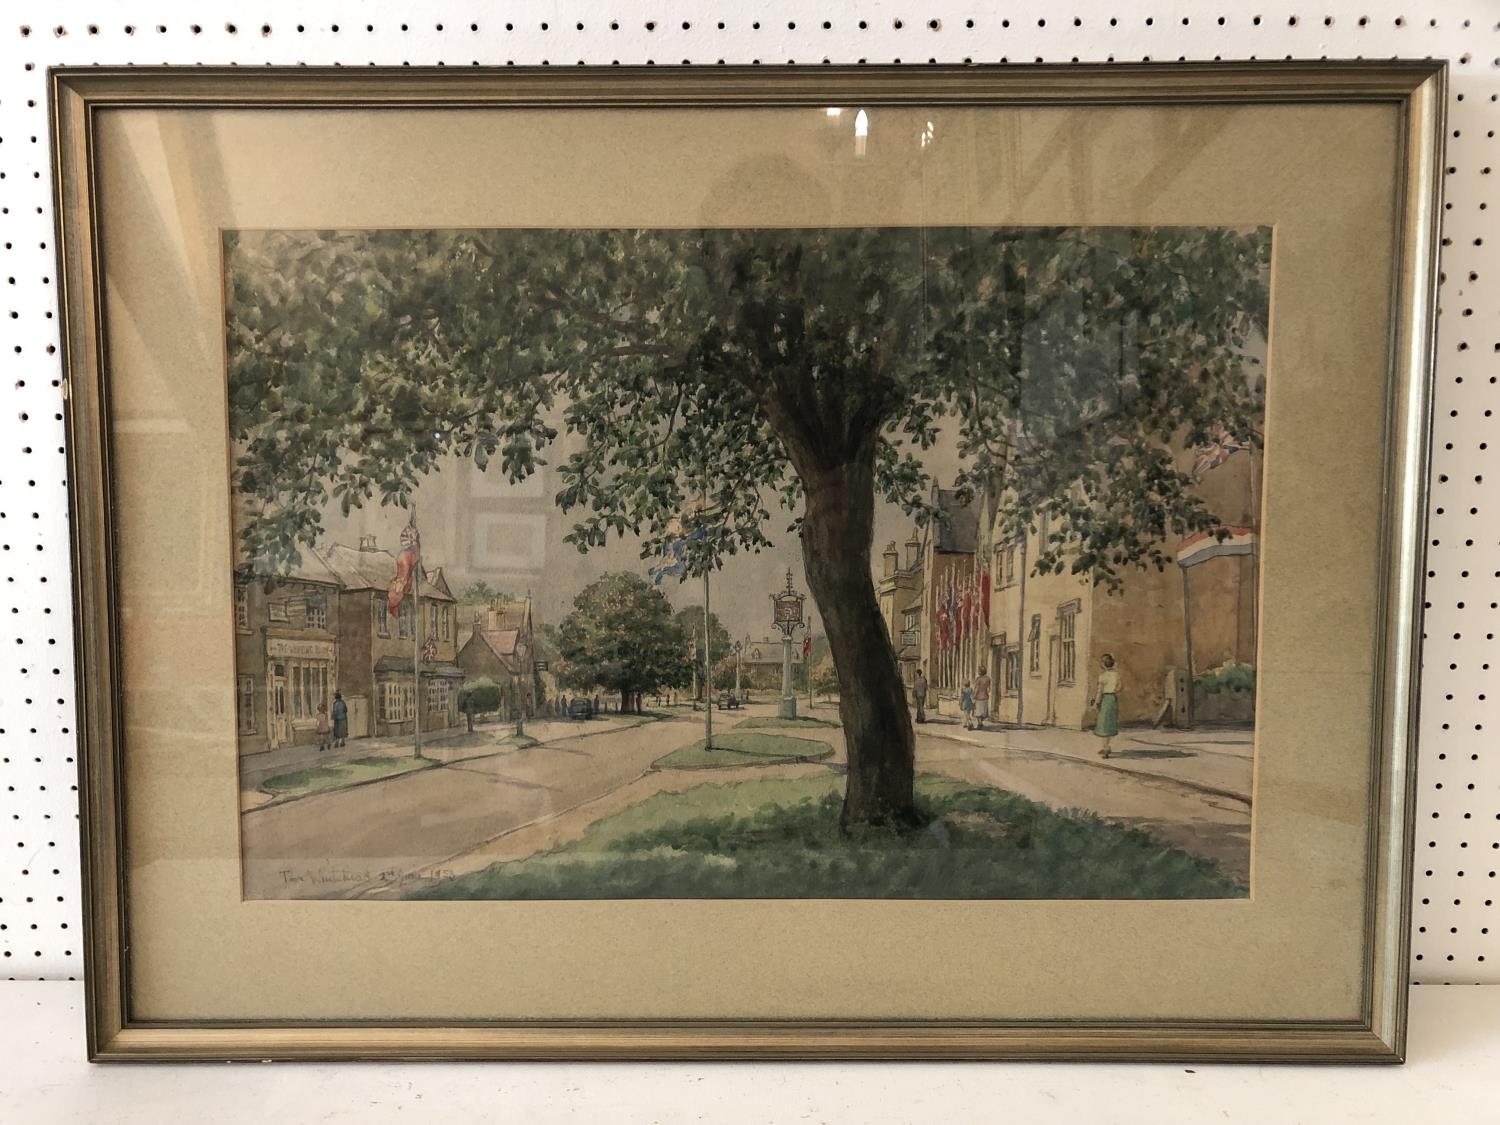 Watercolour and two prints: Tom Whitehead (1886-1959) - Town Street Scene, 1953, watercolour on